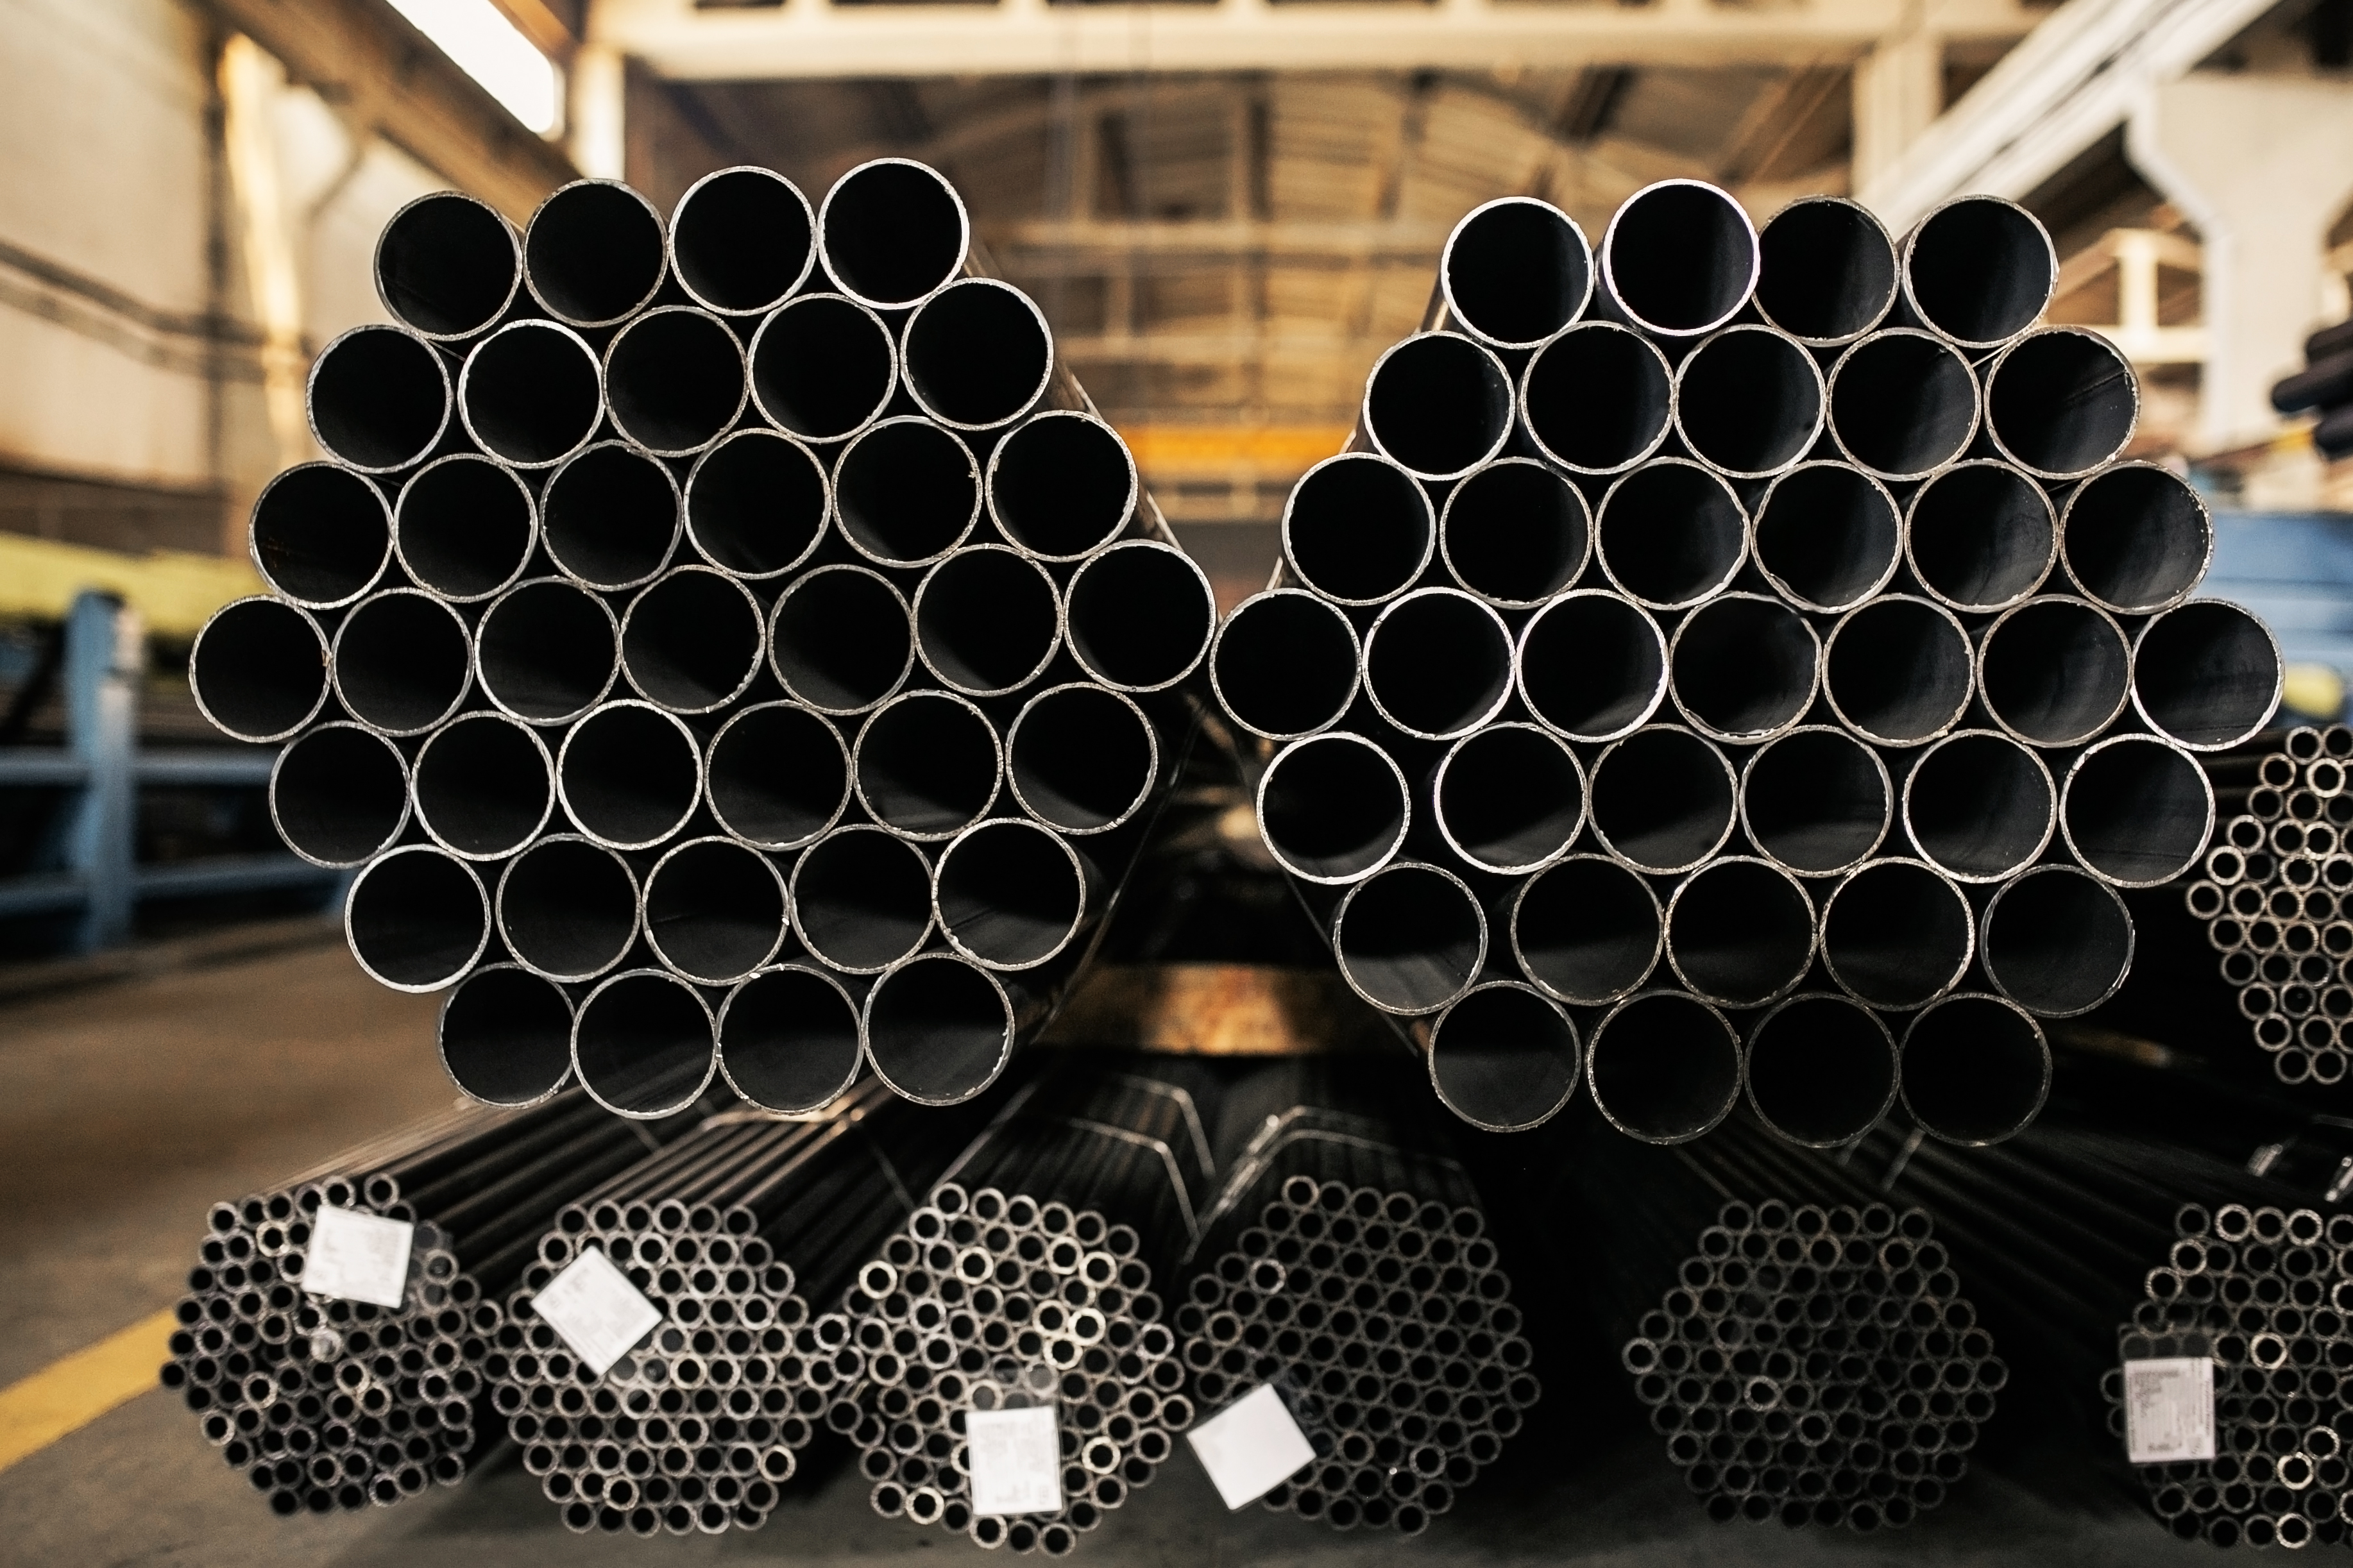 Metallic Pipes On Warehouse, Rows Of Metal Pipes On Industrial Warehouse. Industrial Interior,